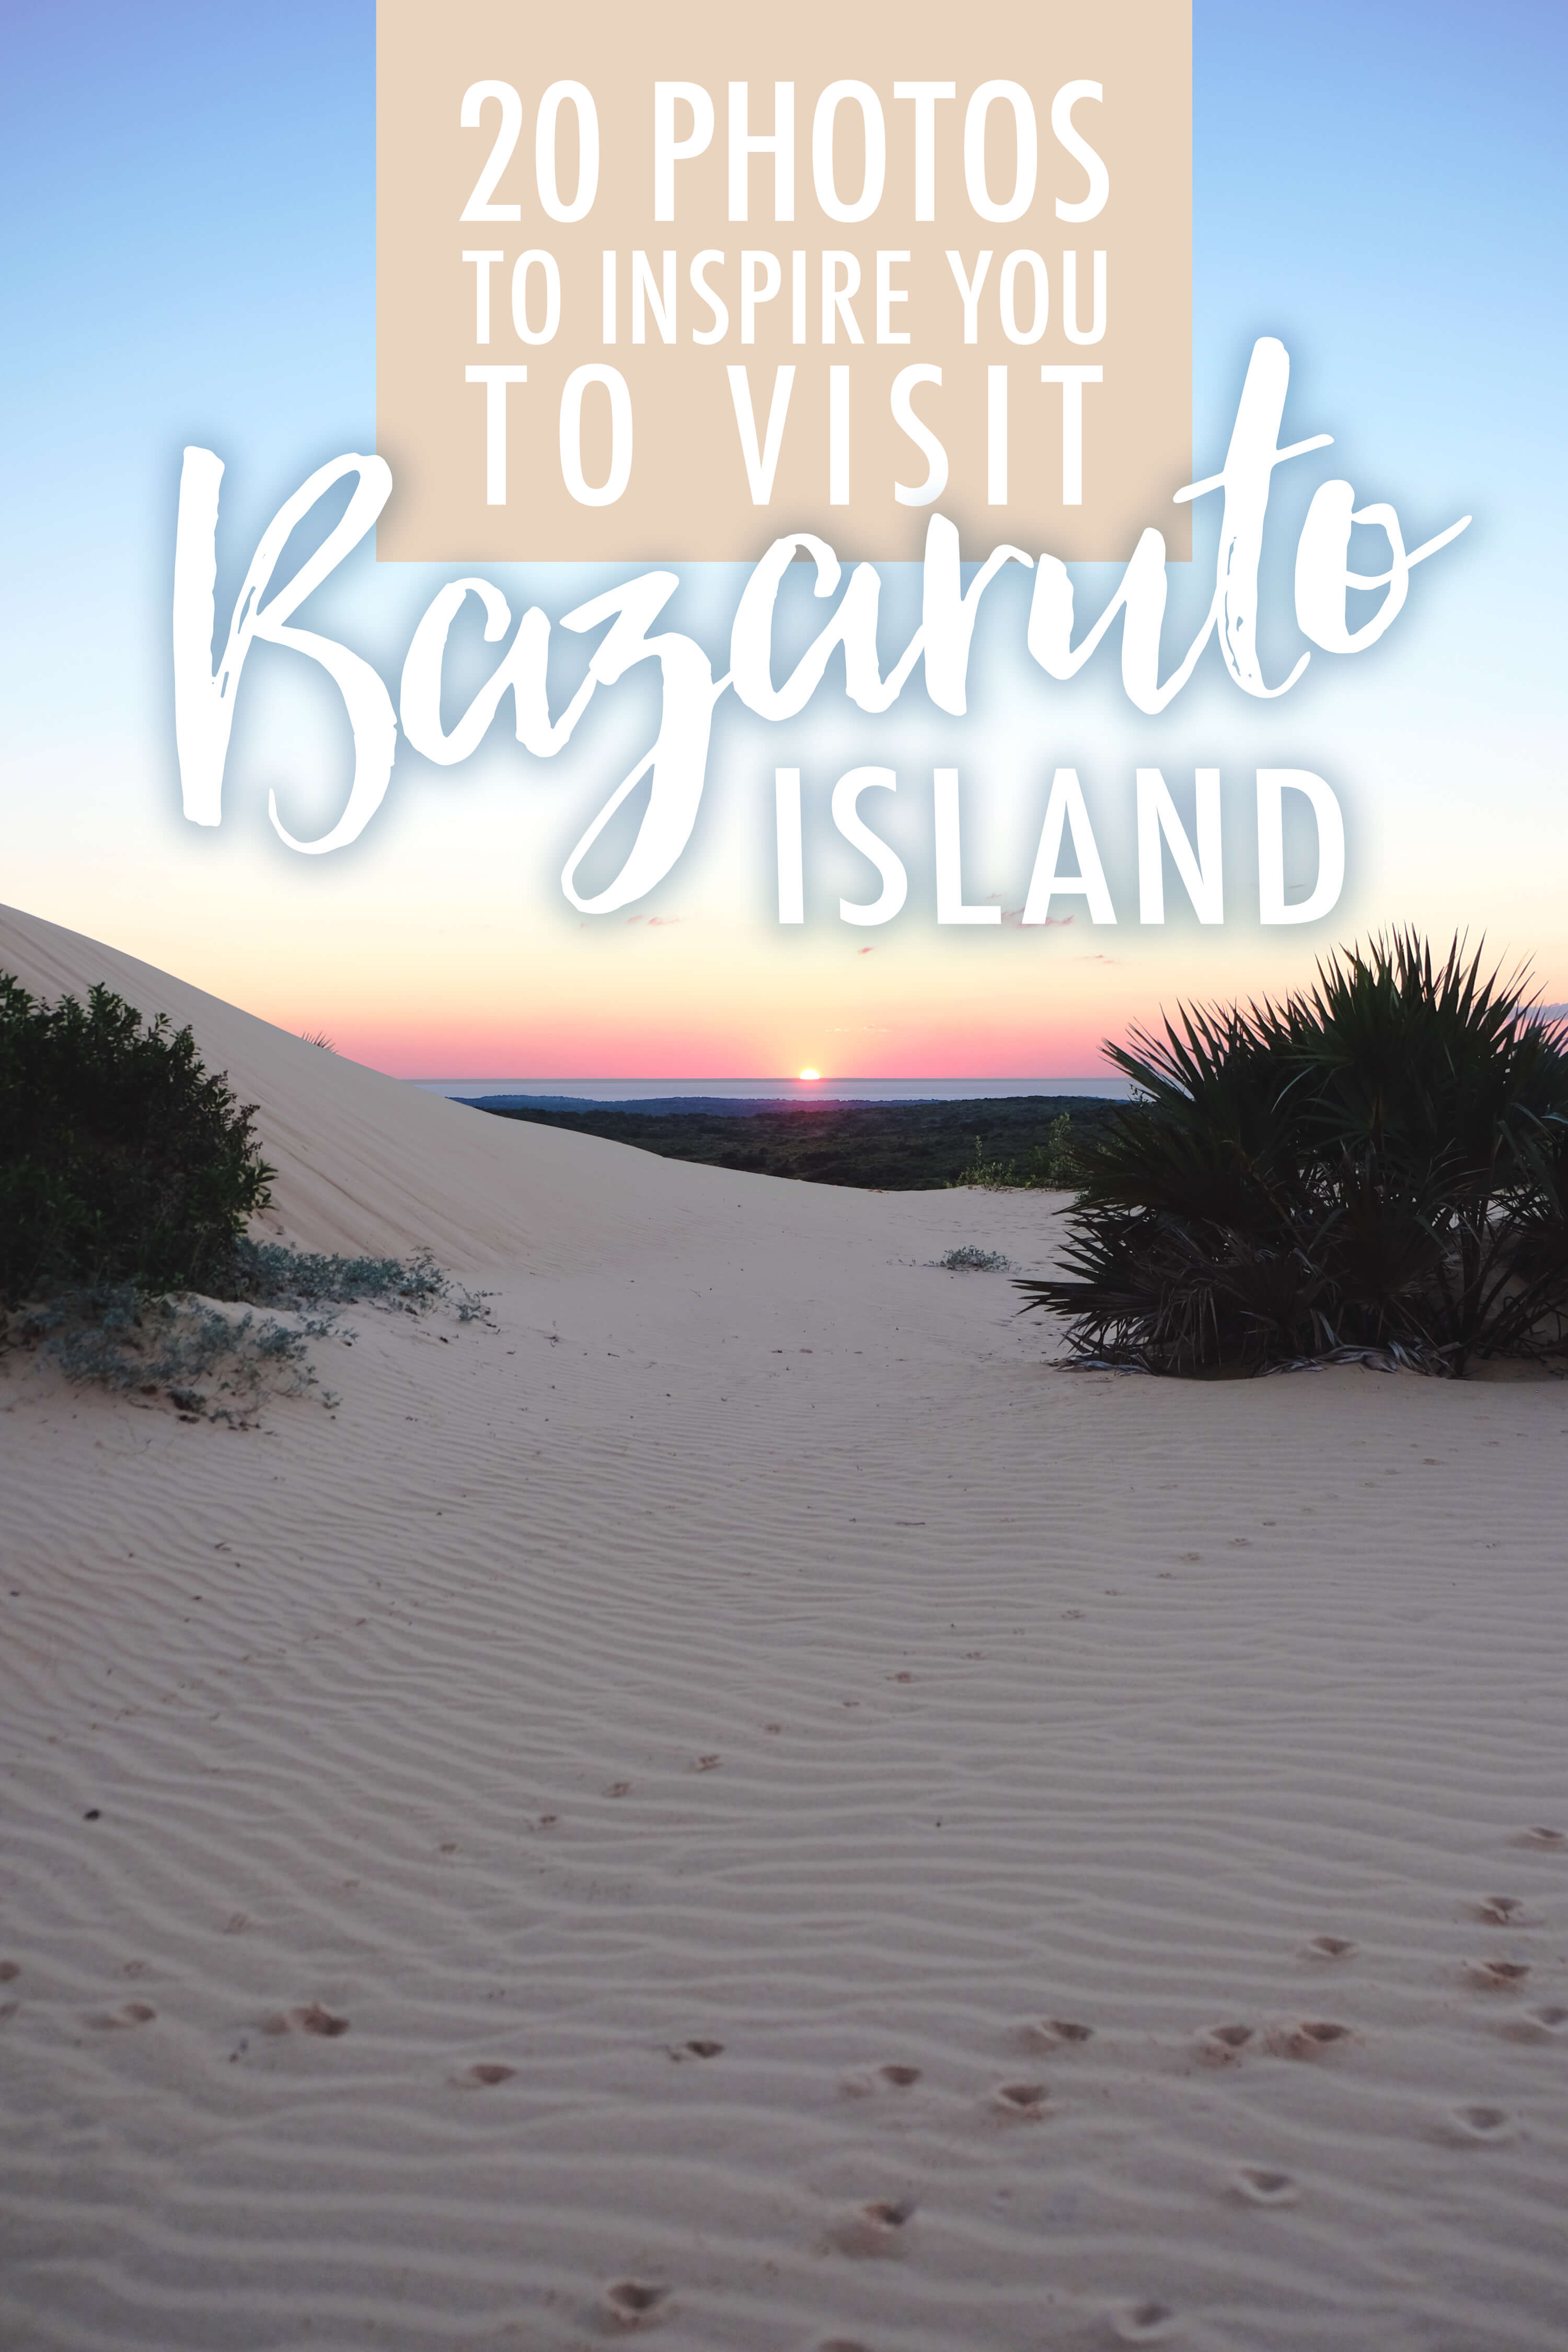 20 Photos to Inspire You to Visit Bazaruto Island